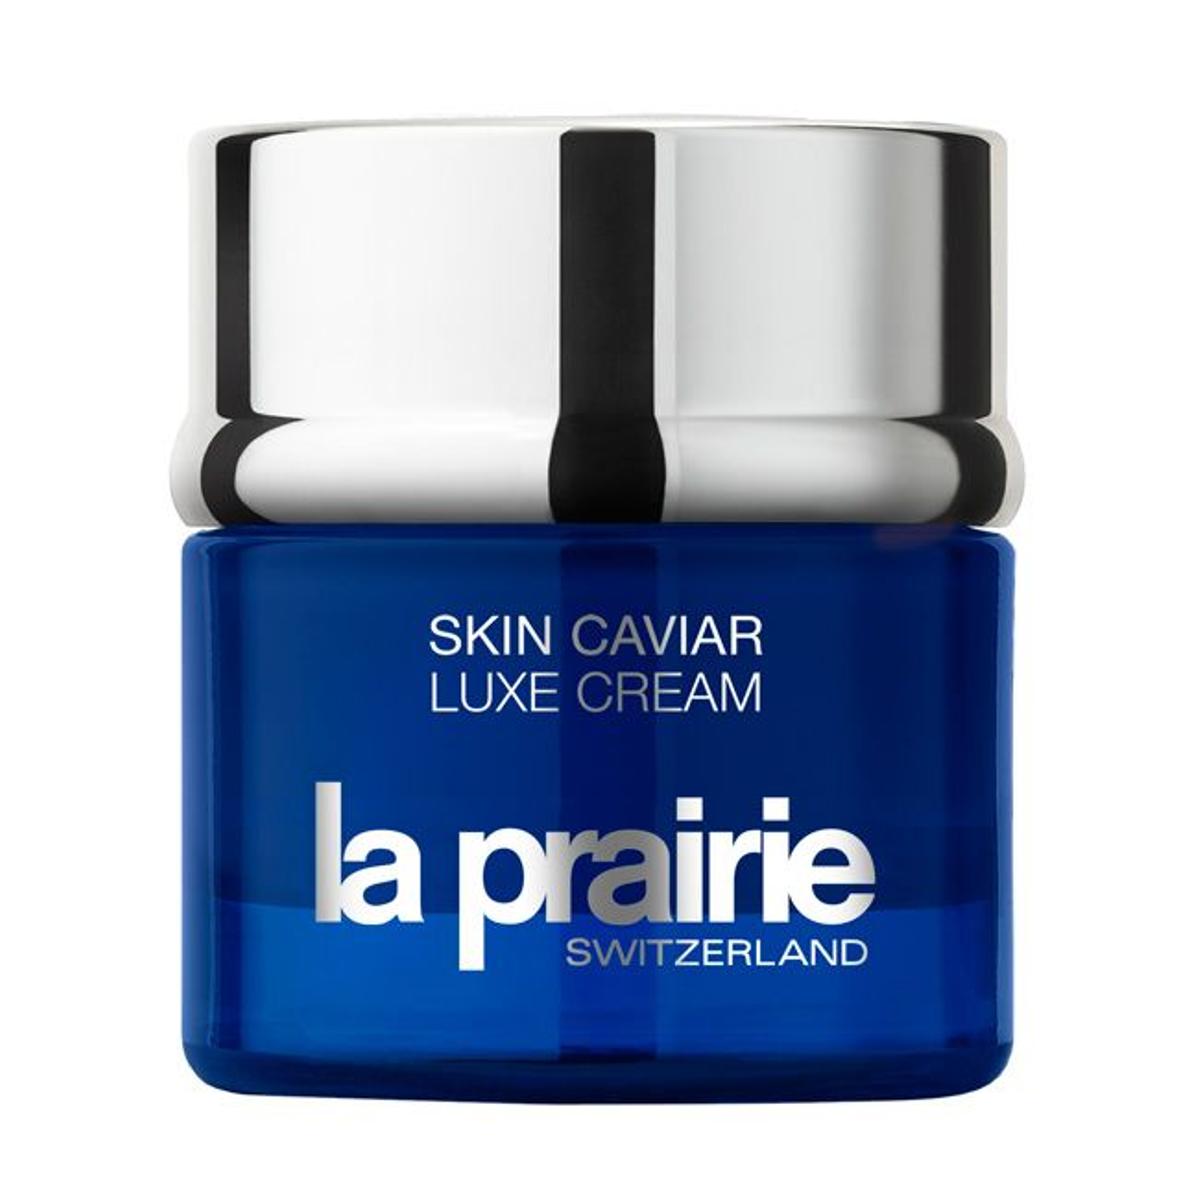 Skin Caviar Luxe Cream, de La Prairie